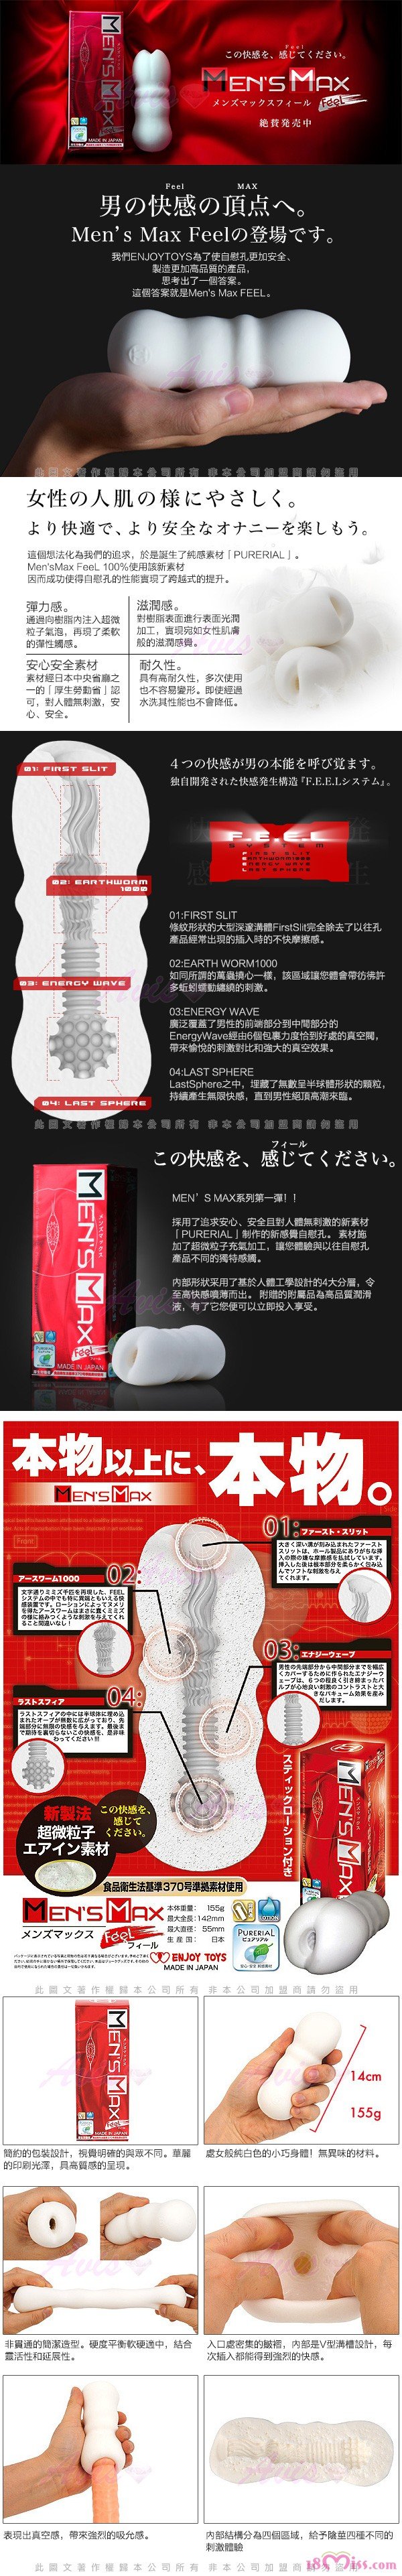 ></p>

 <span> </span><p>．商品名称：日本Men's Max-FEEL 1 网络高度推荐款 纯感嫩肌名器-红 *1 <br>．商品尺寸：长约14cm <br>．商品材质：高级硅胶 <br>．商品颜色：外包装：红</p>

</div>

<img src=